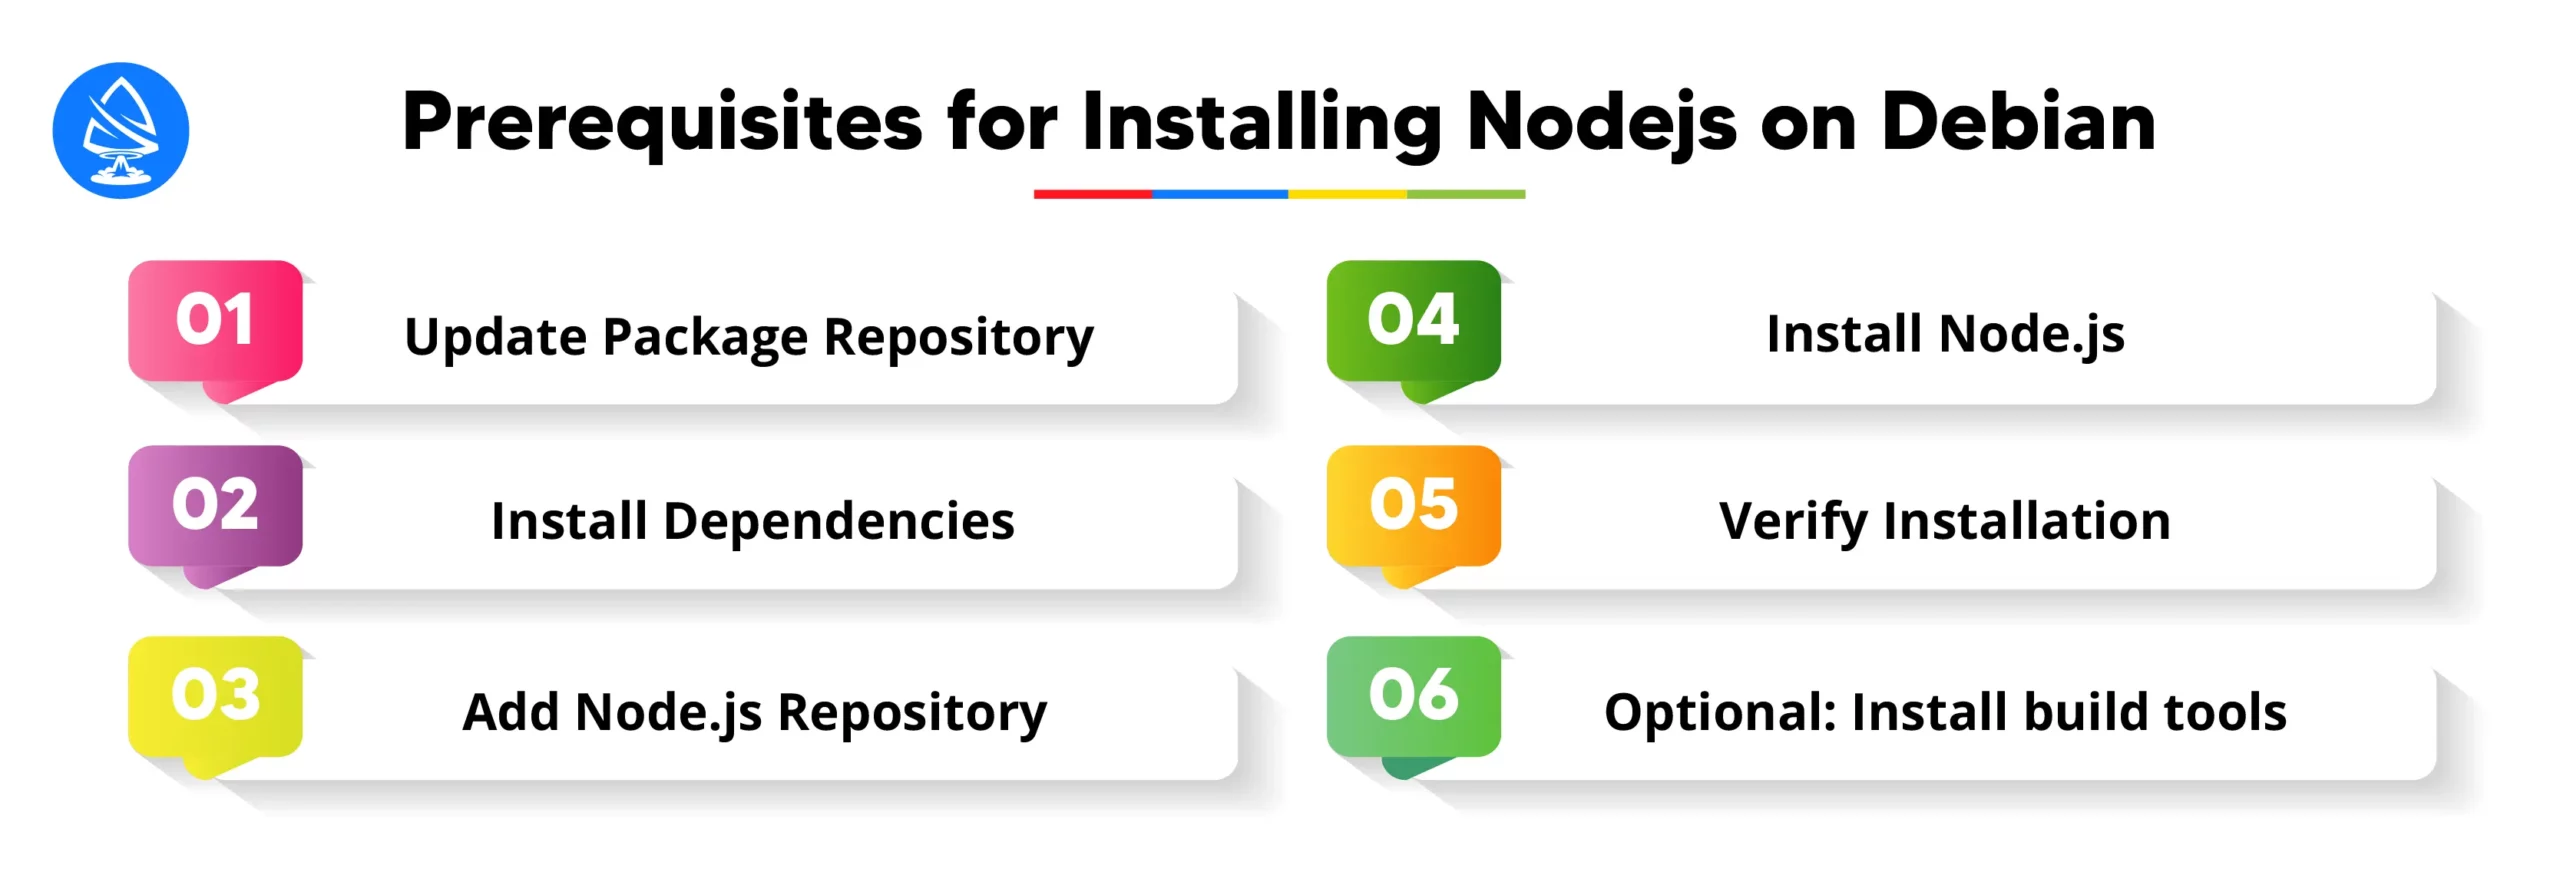 Prerequisites for Installing Nodejs on Debian 